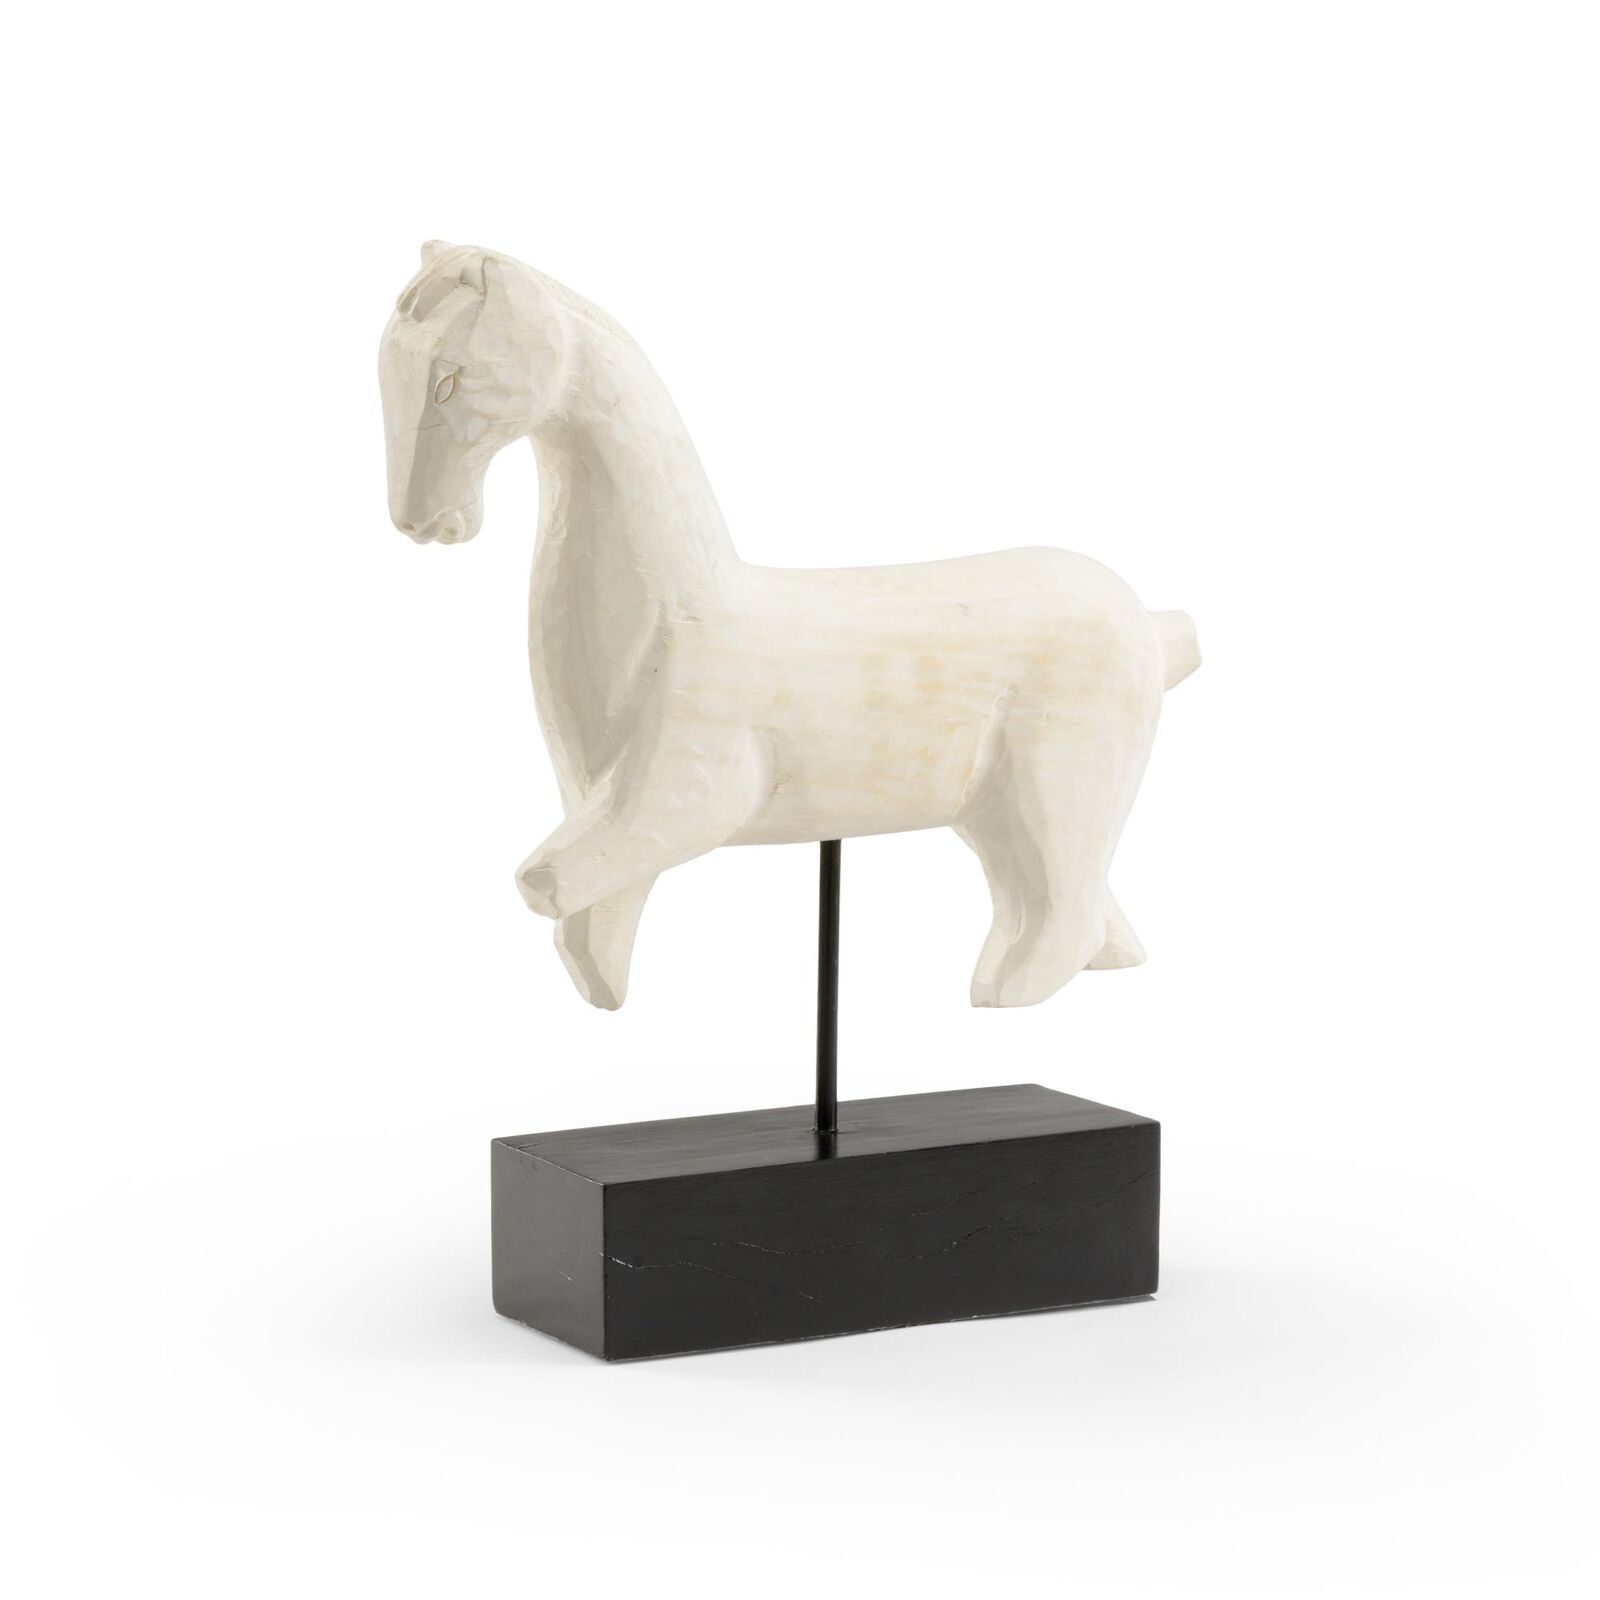 RUNNING HORSE Figurine by Wildwood | 1800 Lighting